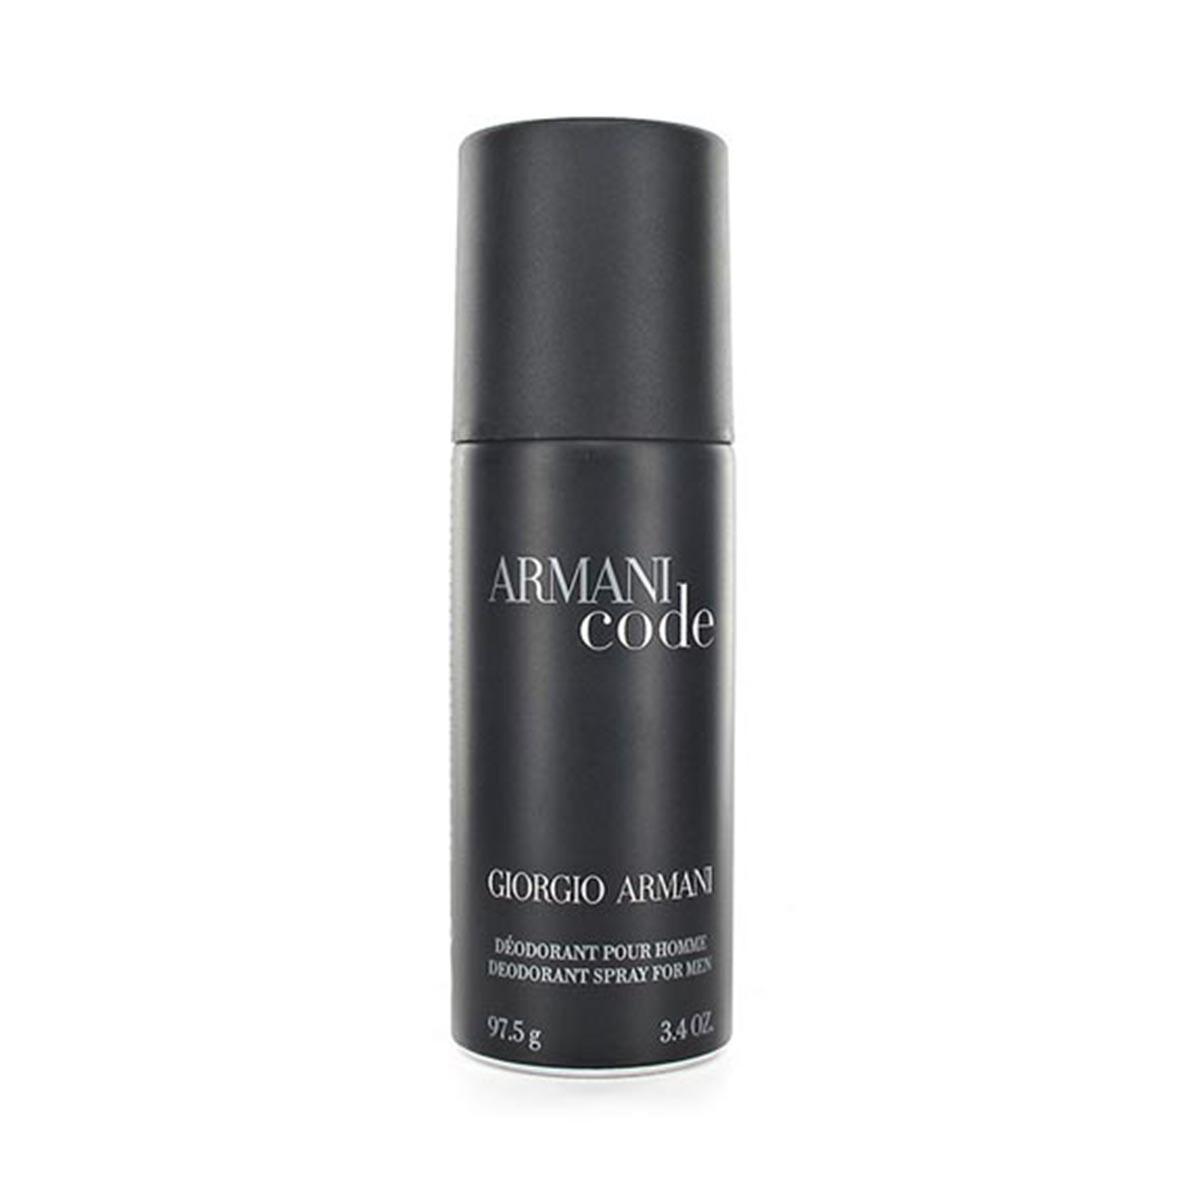 Giorgio Armani Code Deodorant Spray 150ml One Size